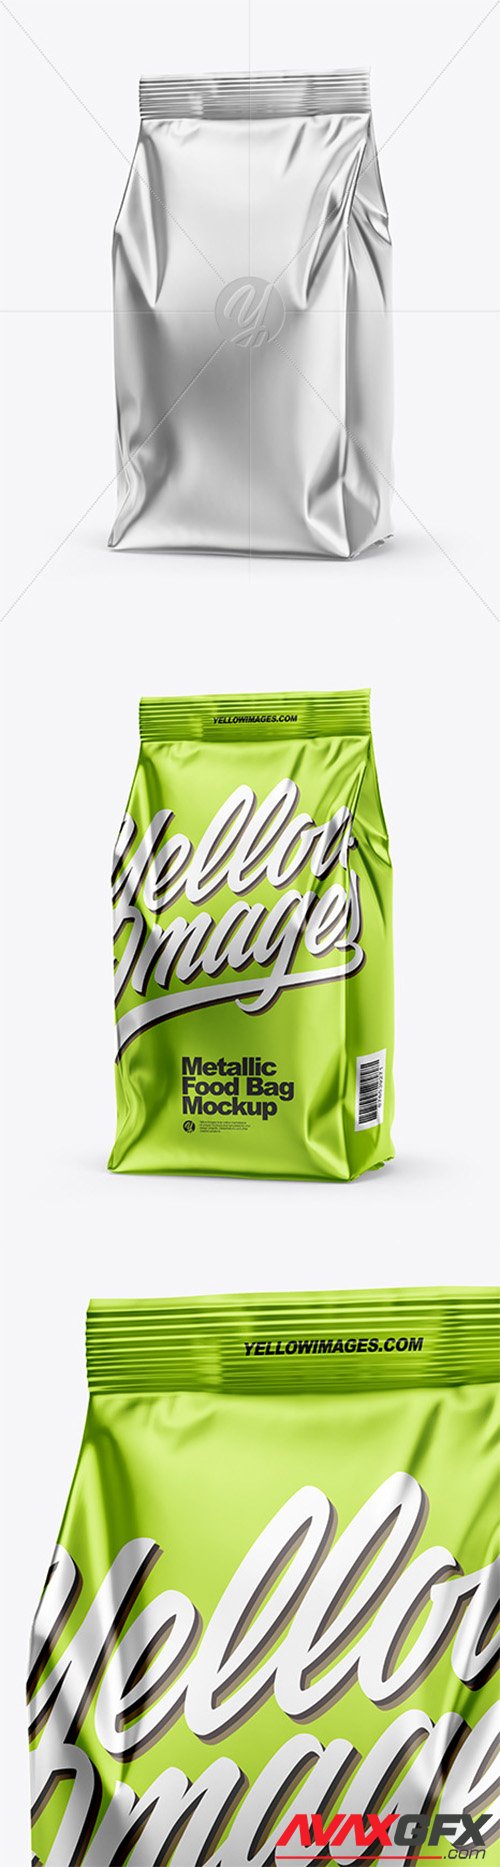 Download 45 Metallic Food Bag Front View Branding Mockups Yellowimages Mockups